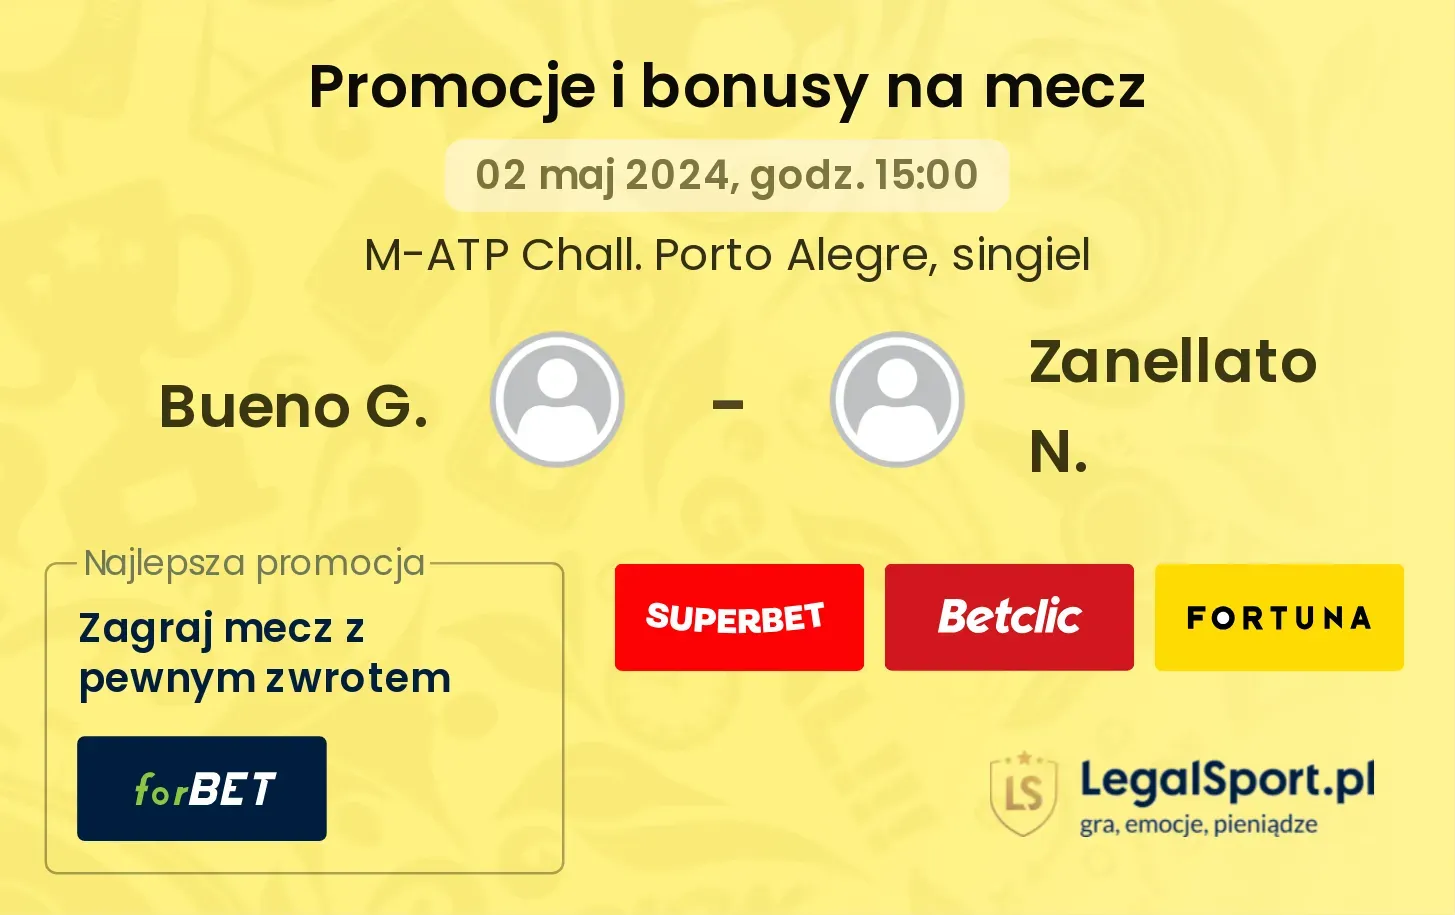 Bueno G. - Zanellato N. promocje bonusy na mecz